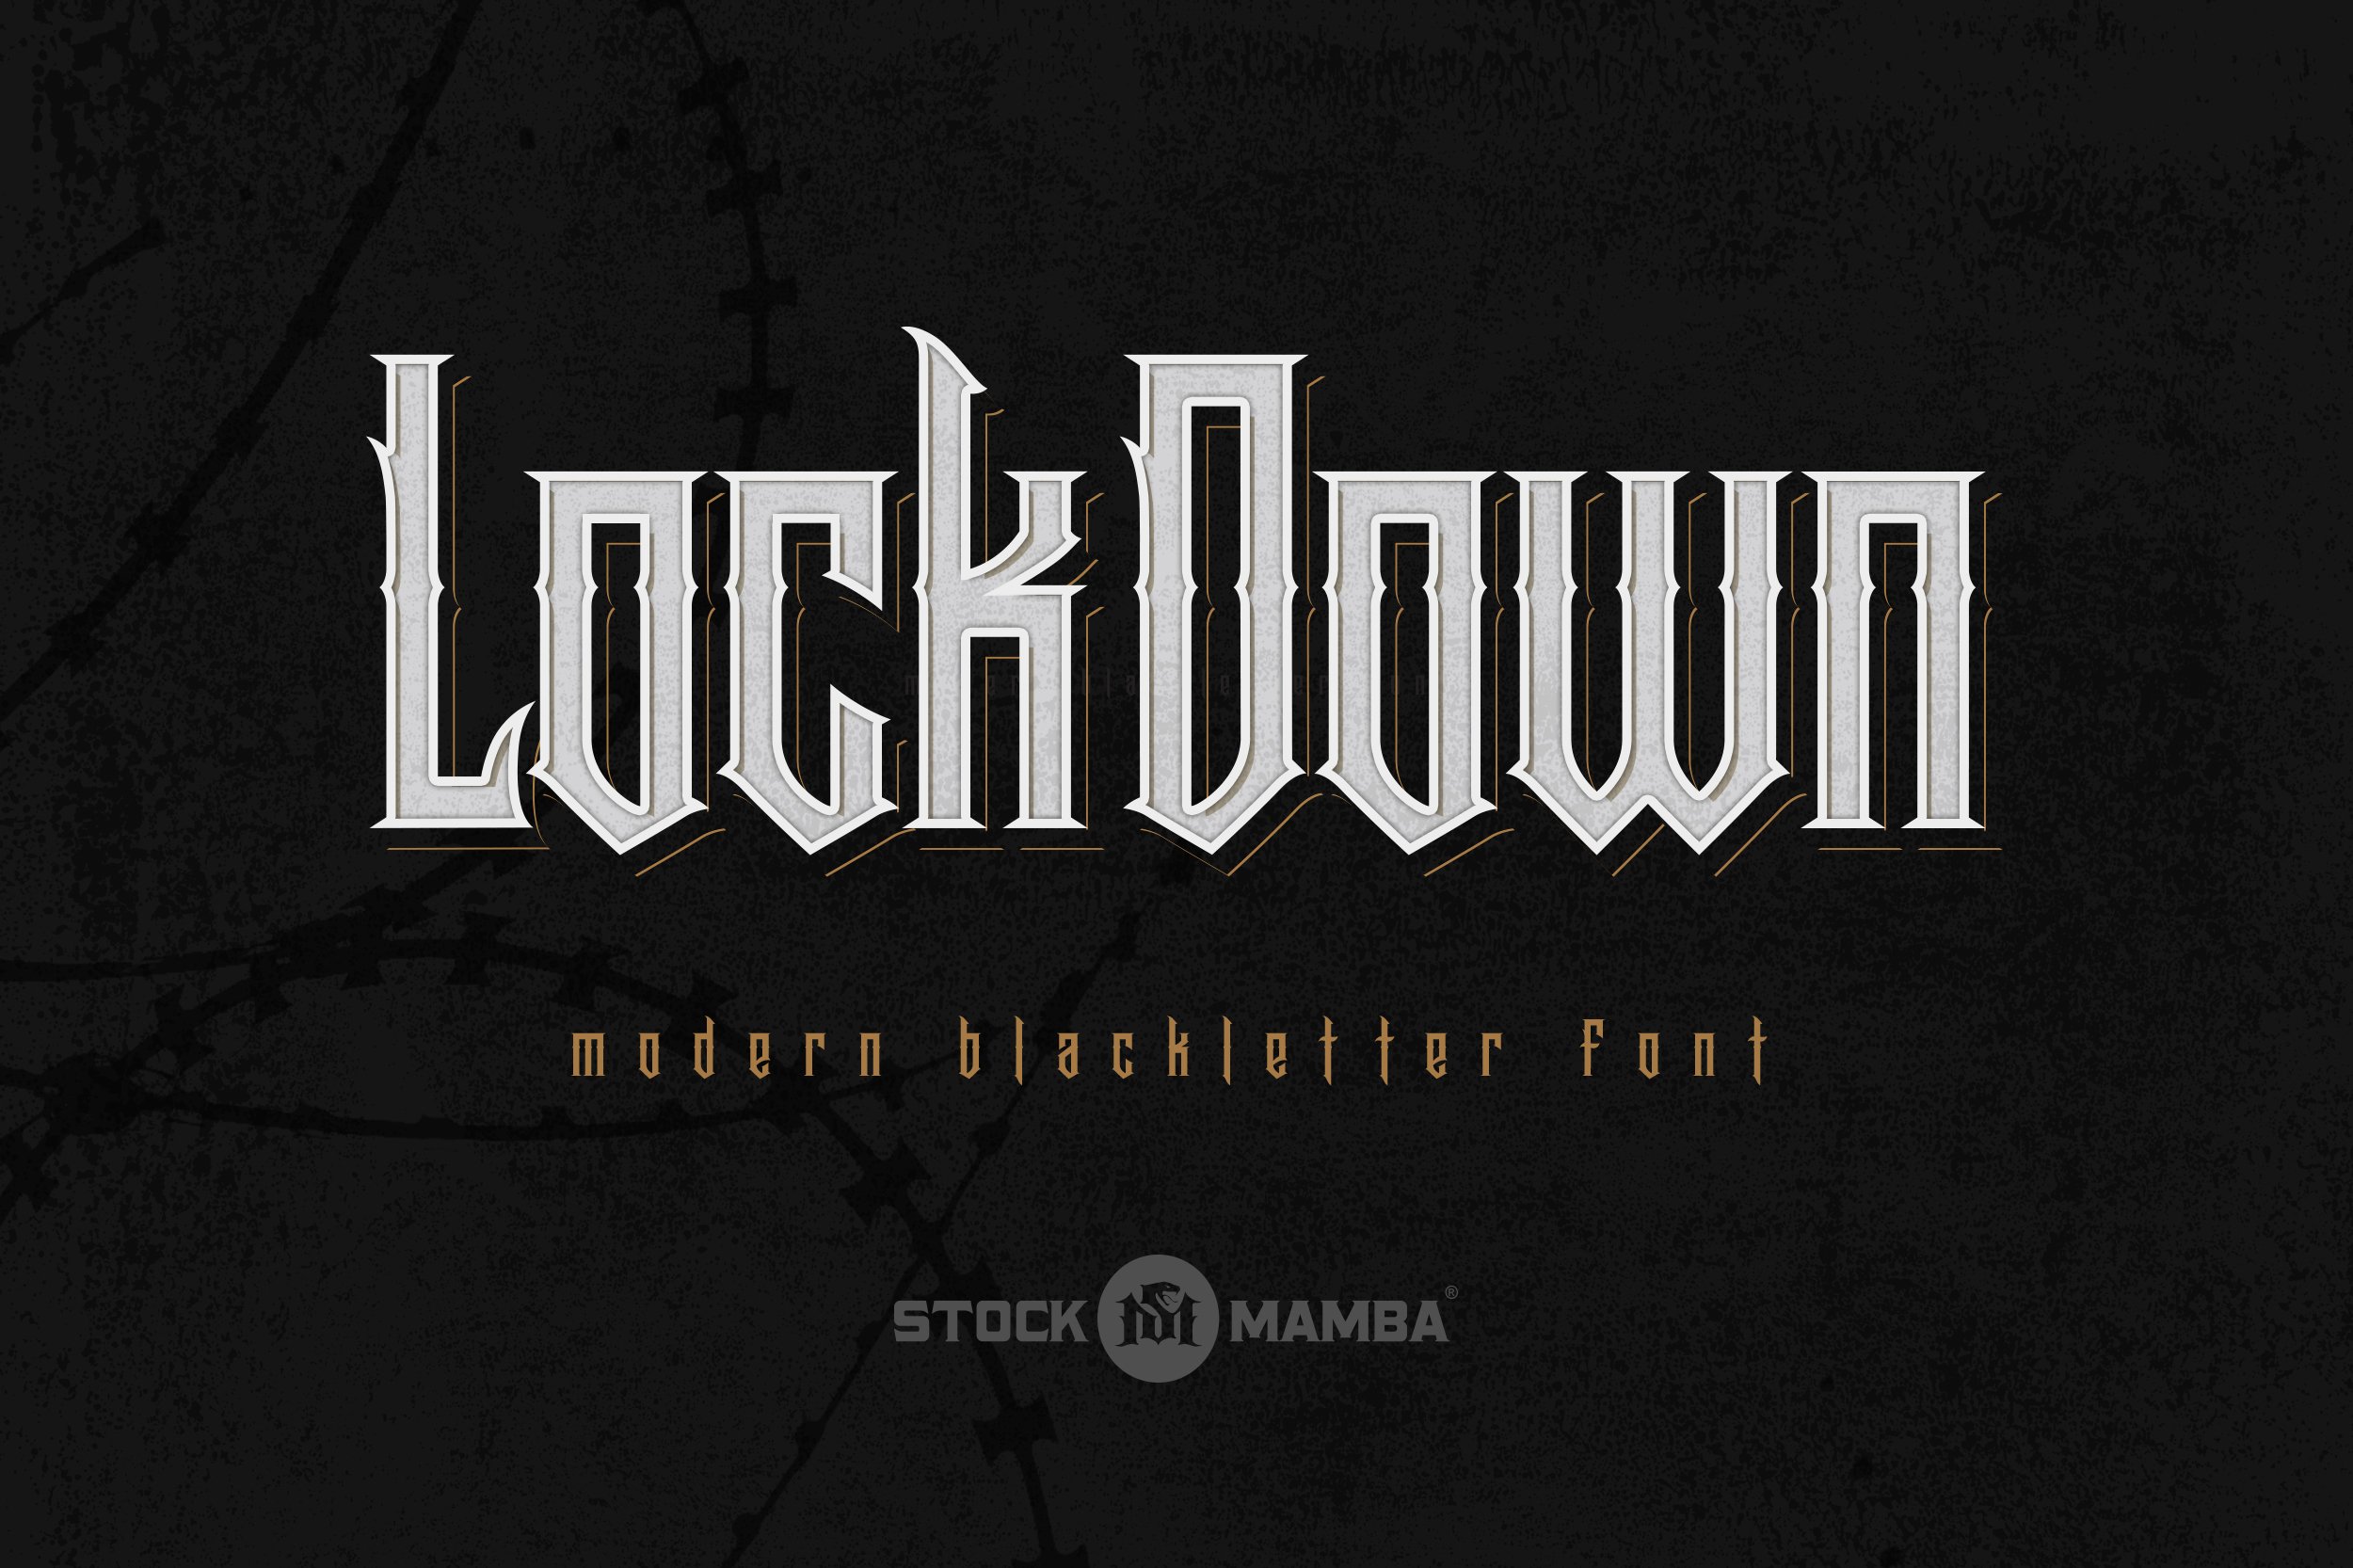 Lock Down Blackletter Font cover image.